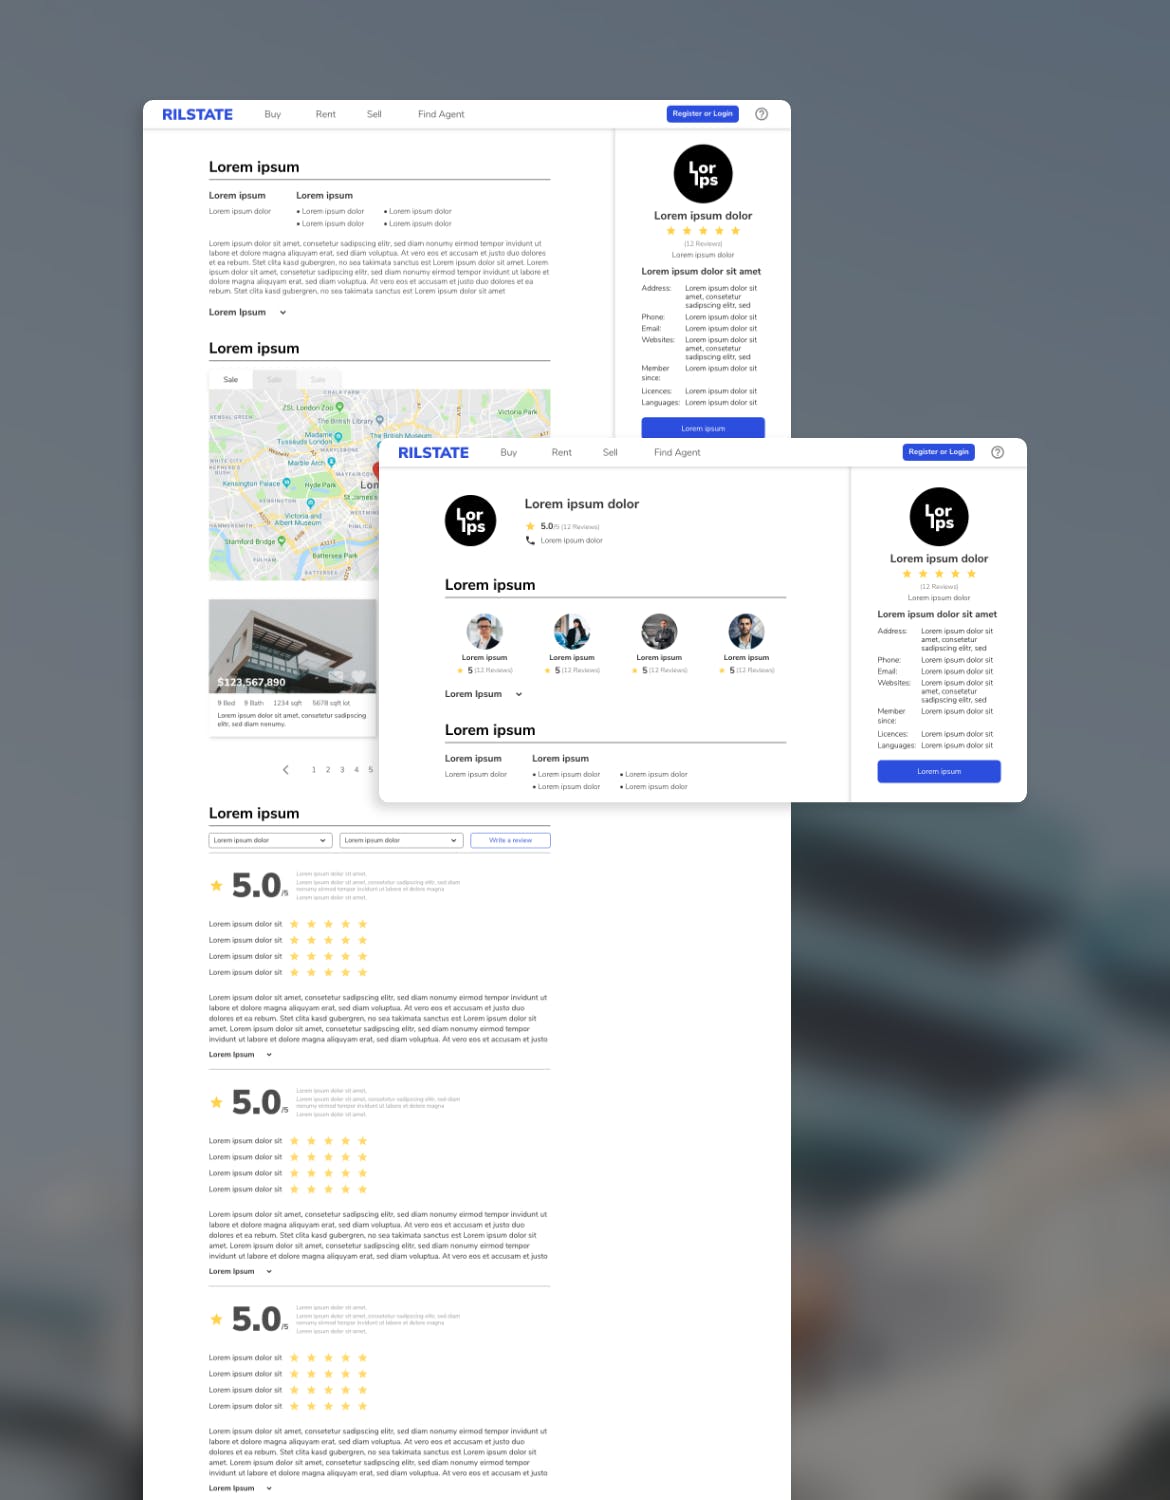 房地产租赁销售网站设计HTML模板素材中国精选 RILSTATE – Real Estate Homepage Template插图(5)